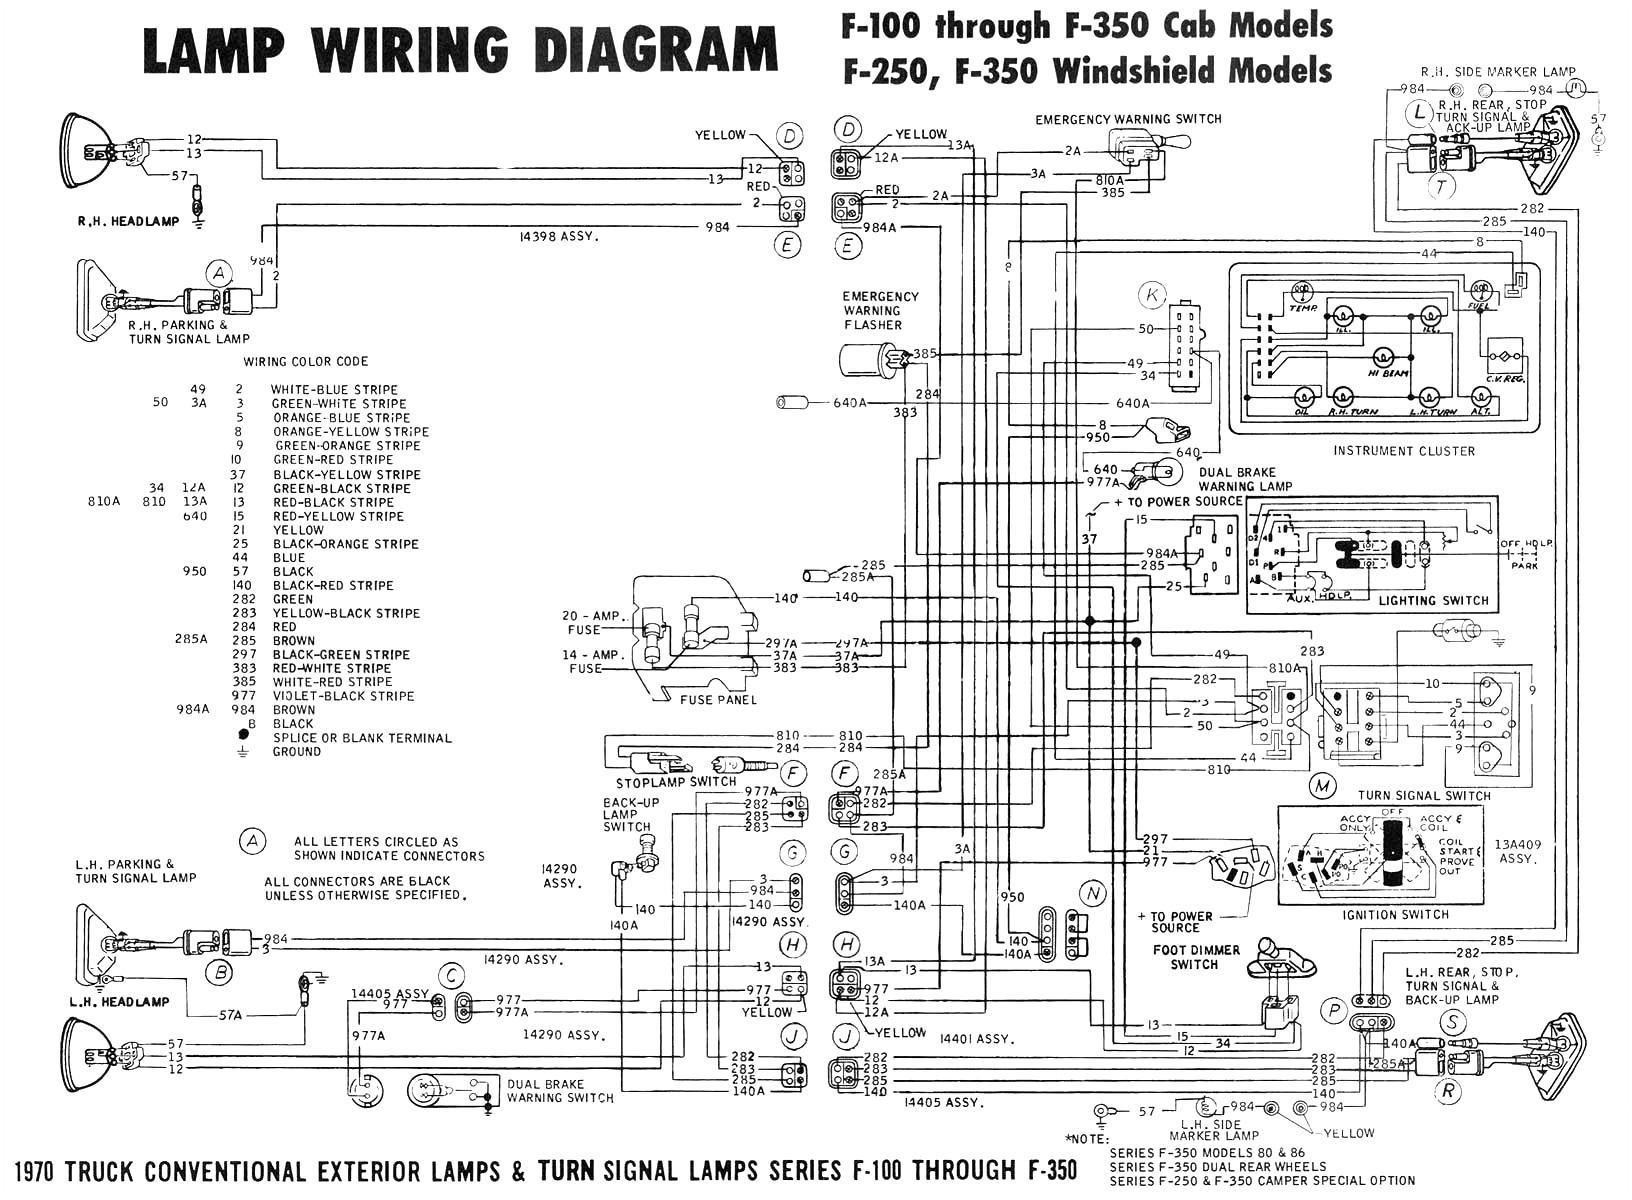 06 mustang wiring diagram free download schematic wiring diagrams wiring harness for 1968 ford mustang free download